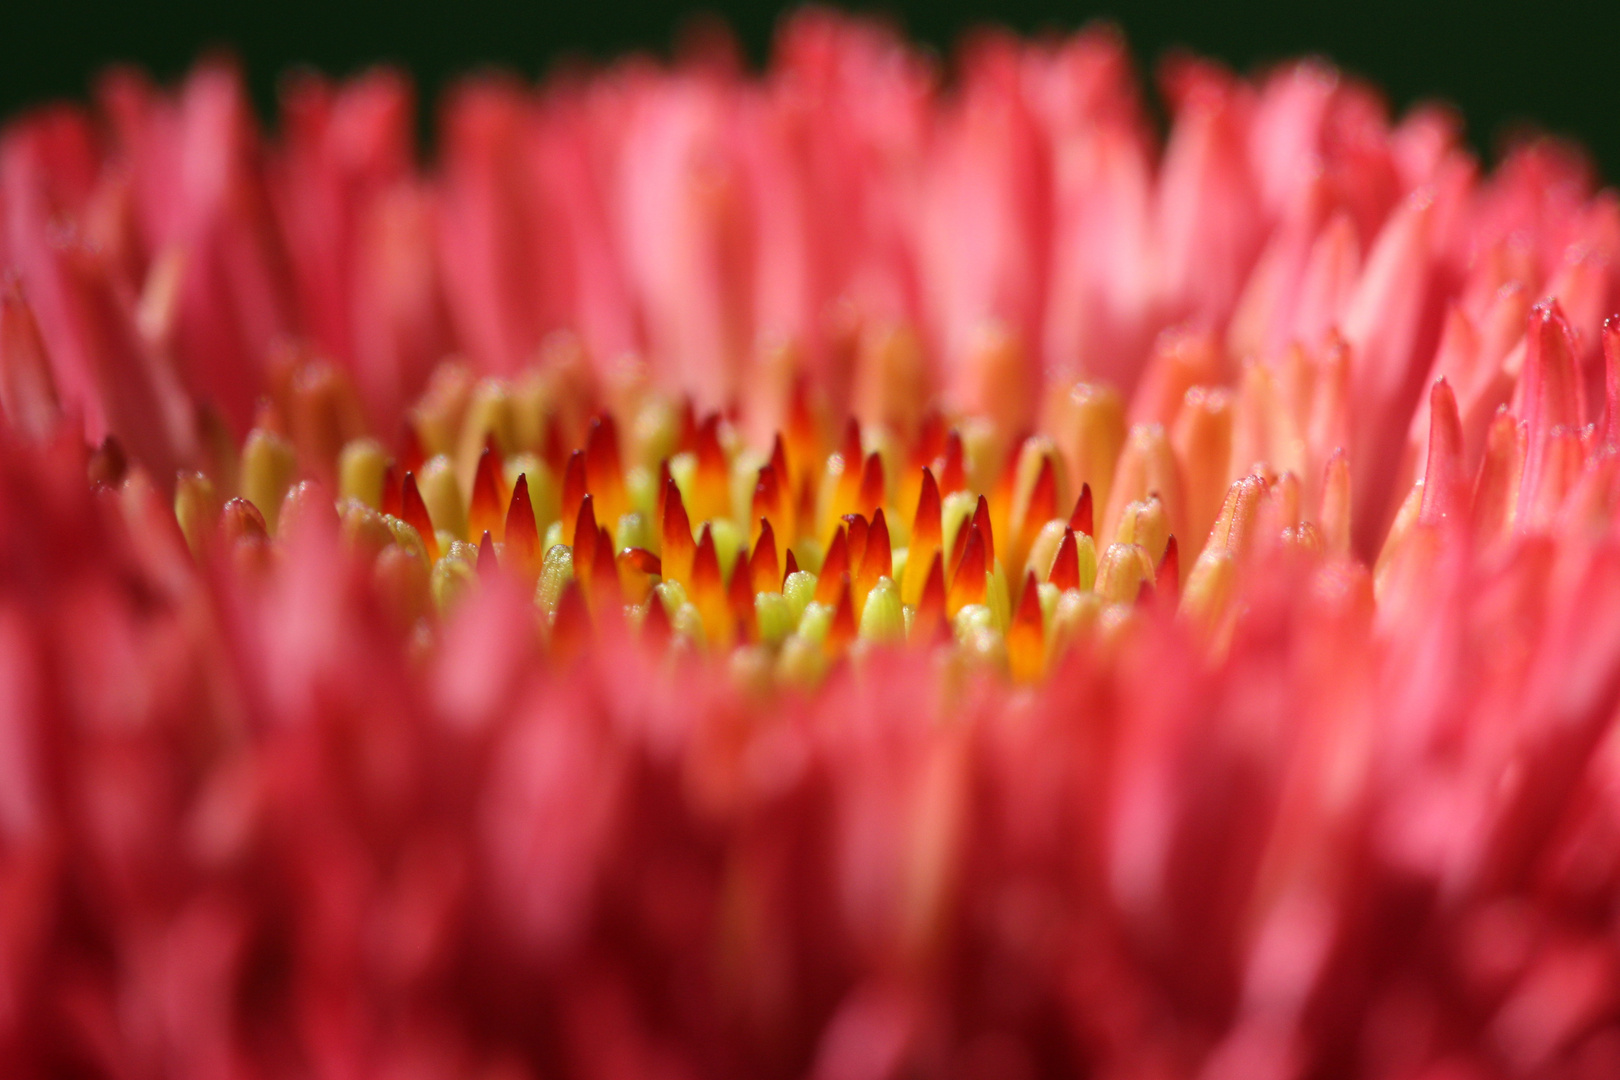 Echinacea purpurea proxima